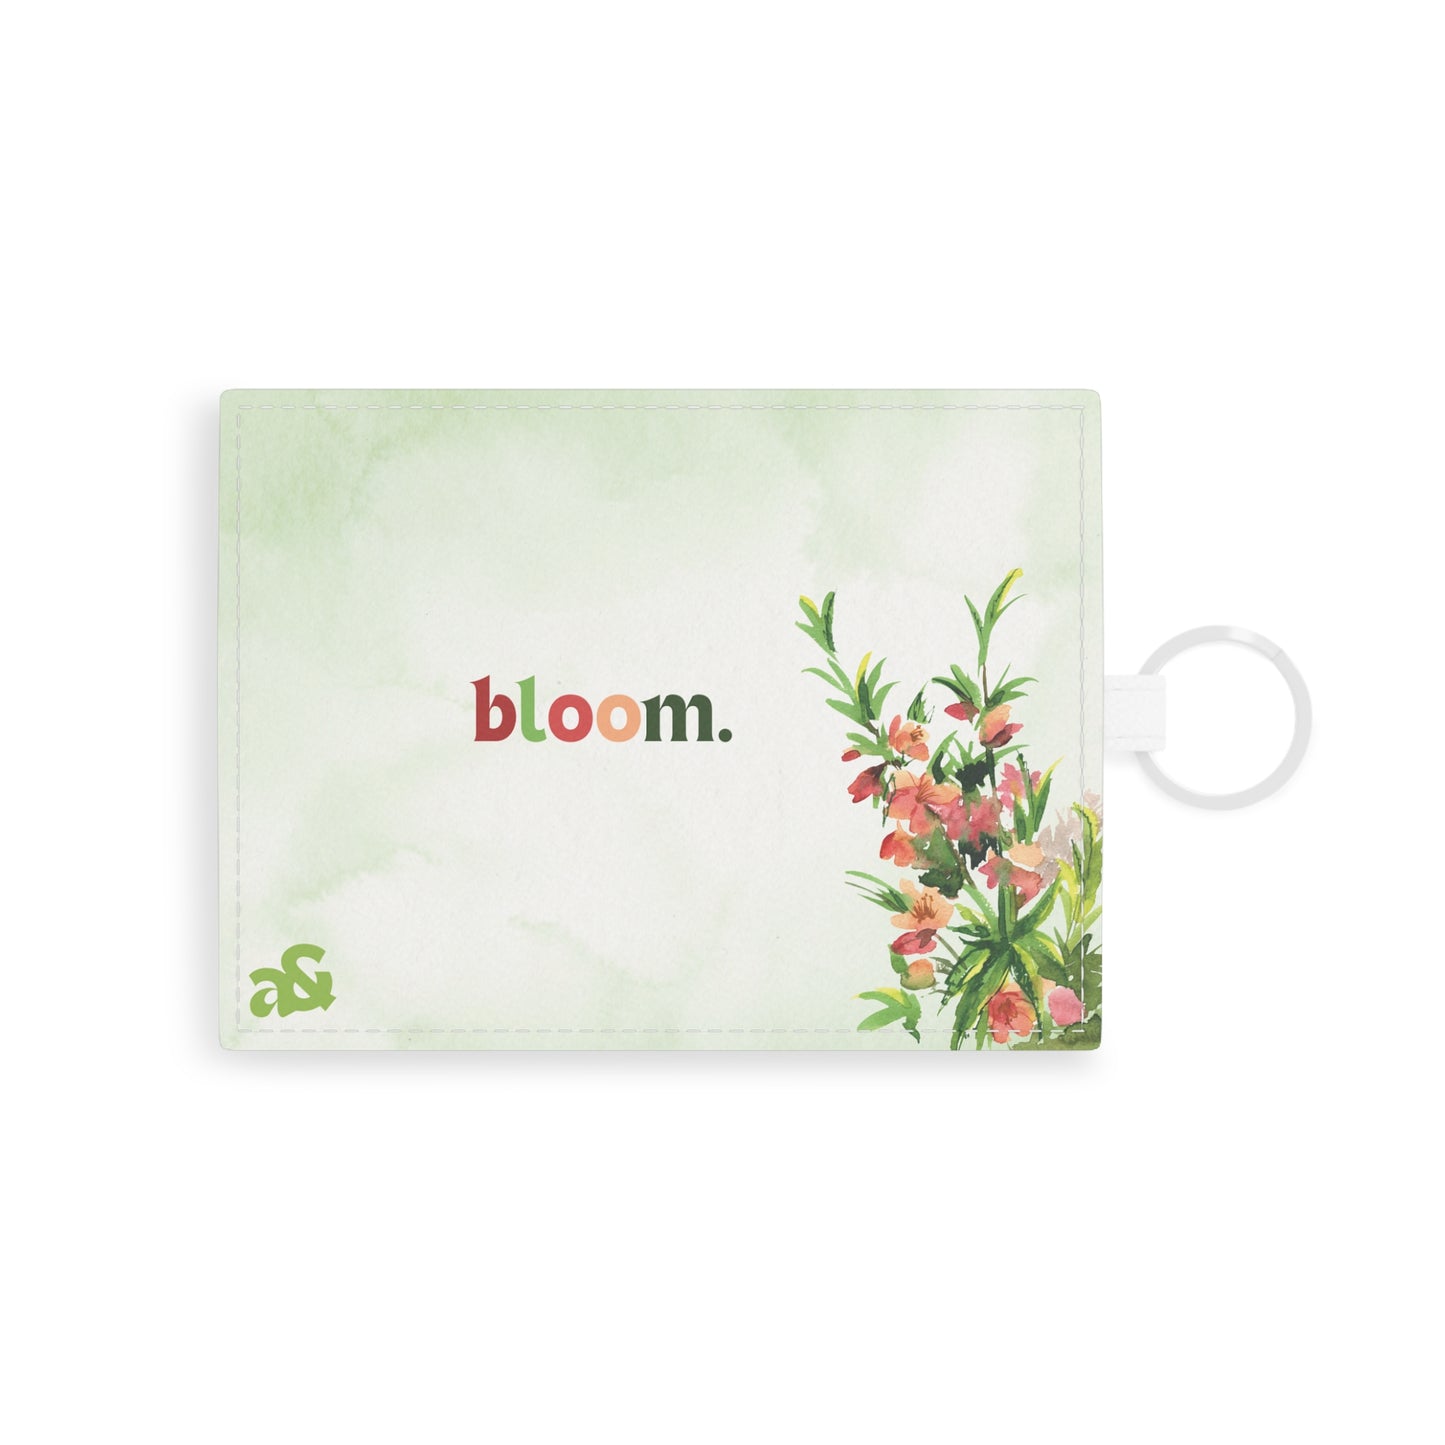 Artemis & Athena "Bloom" Saffiano Leather Card Holder